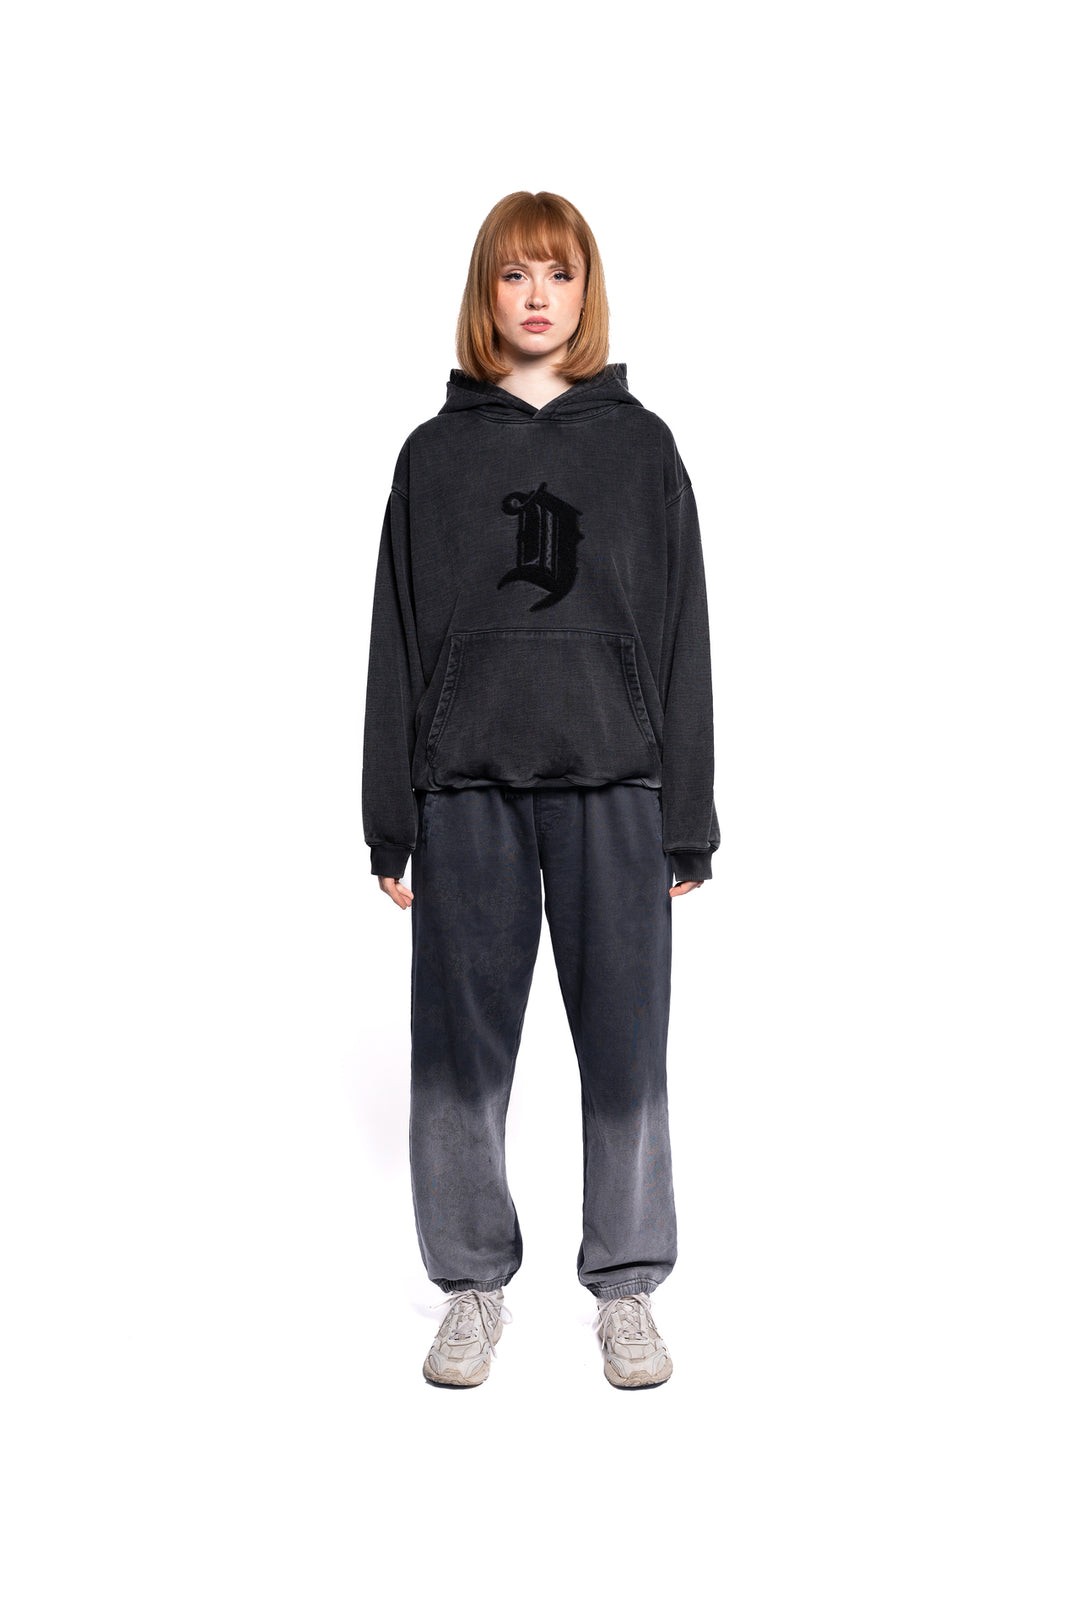 Junge Frau präsentiert den oversized black D Lab Hoodie, kombiniert mit passender Jogginghose